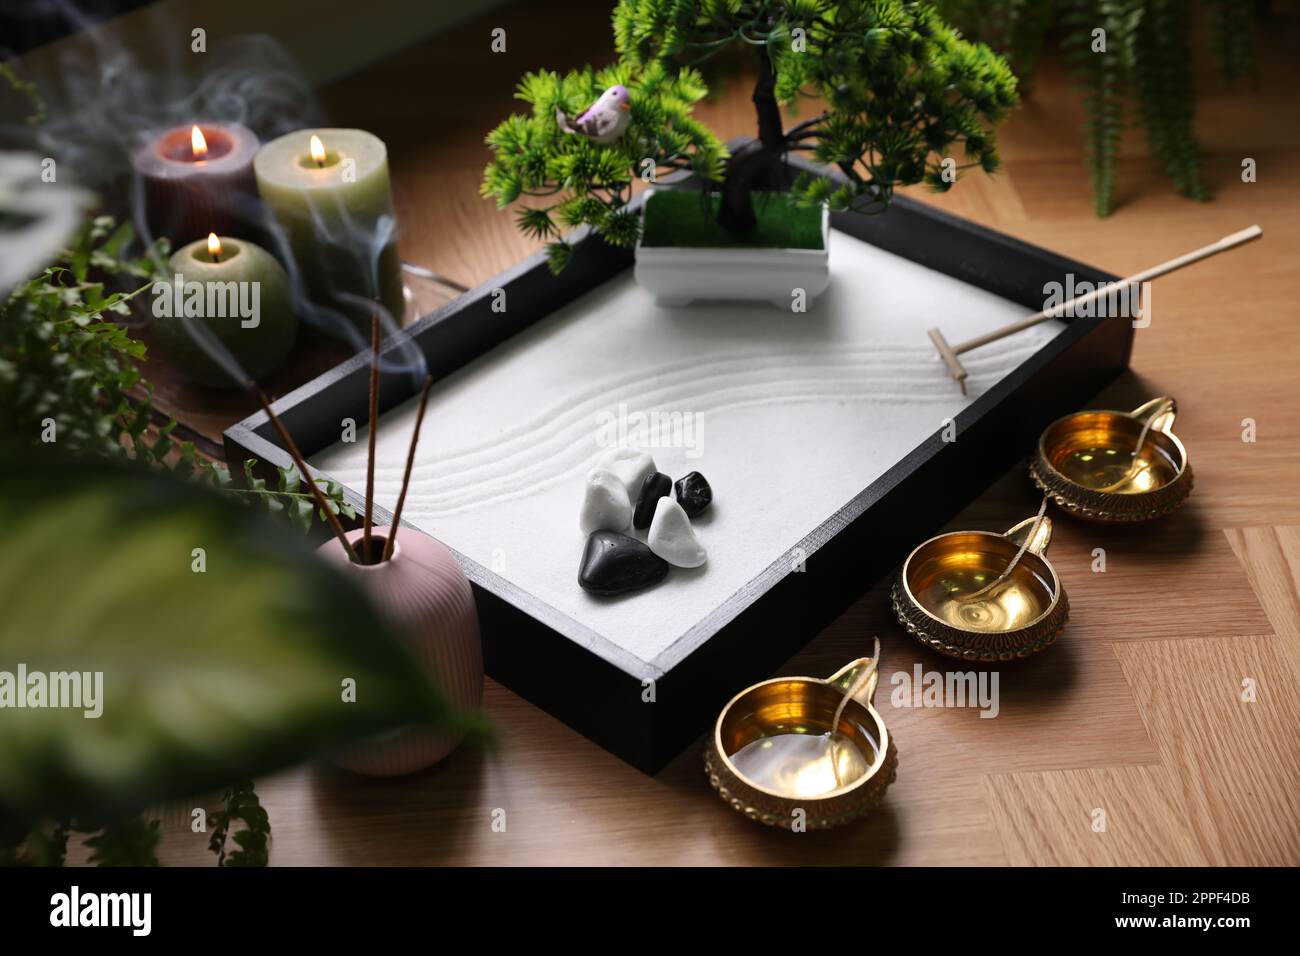 Beautiful Miniature Zen Garden on White Table Stock Photo - Image